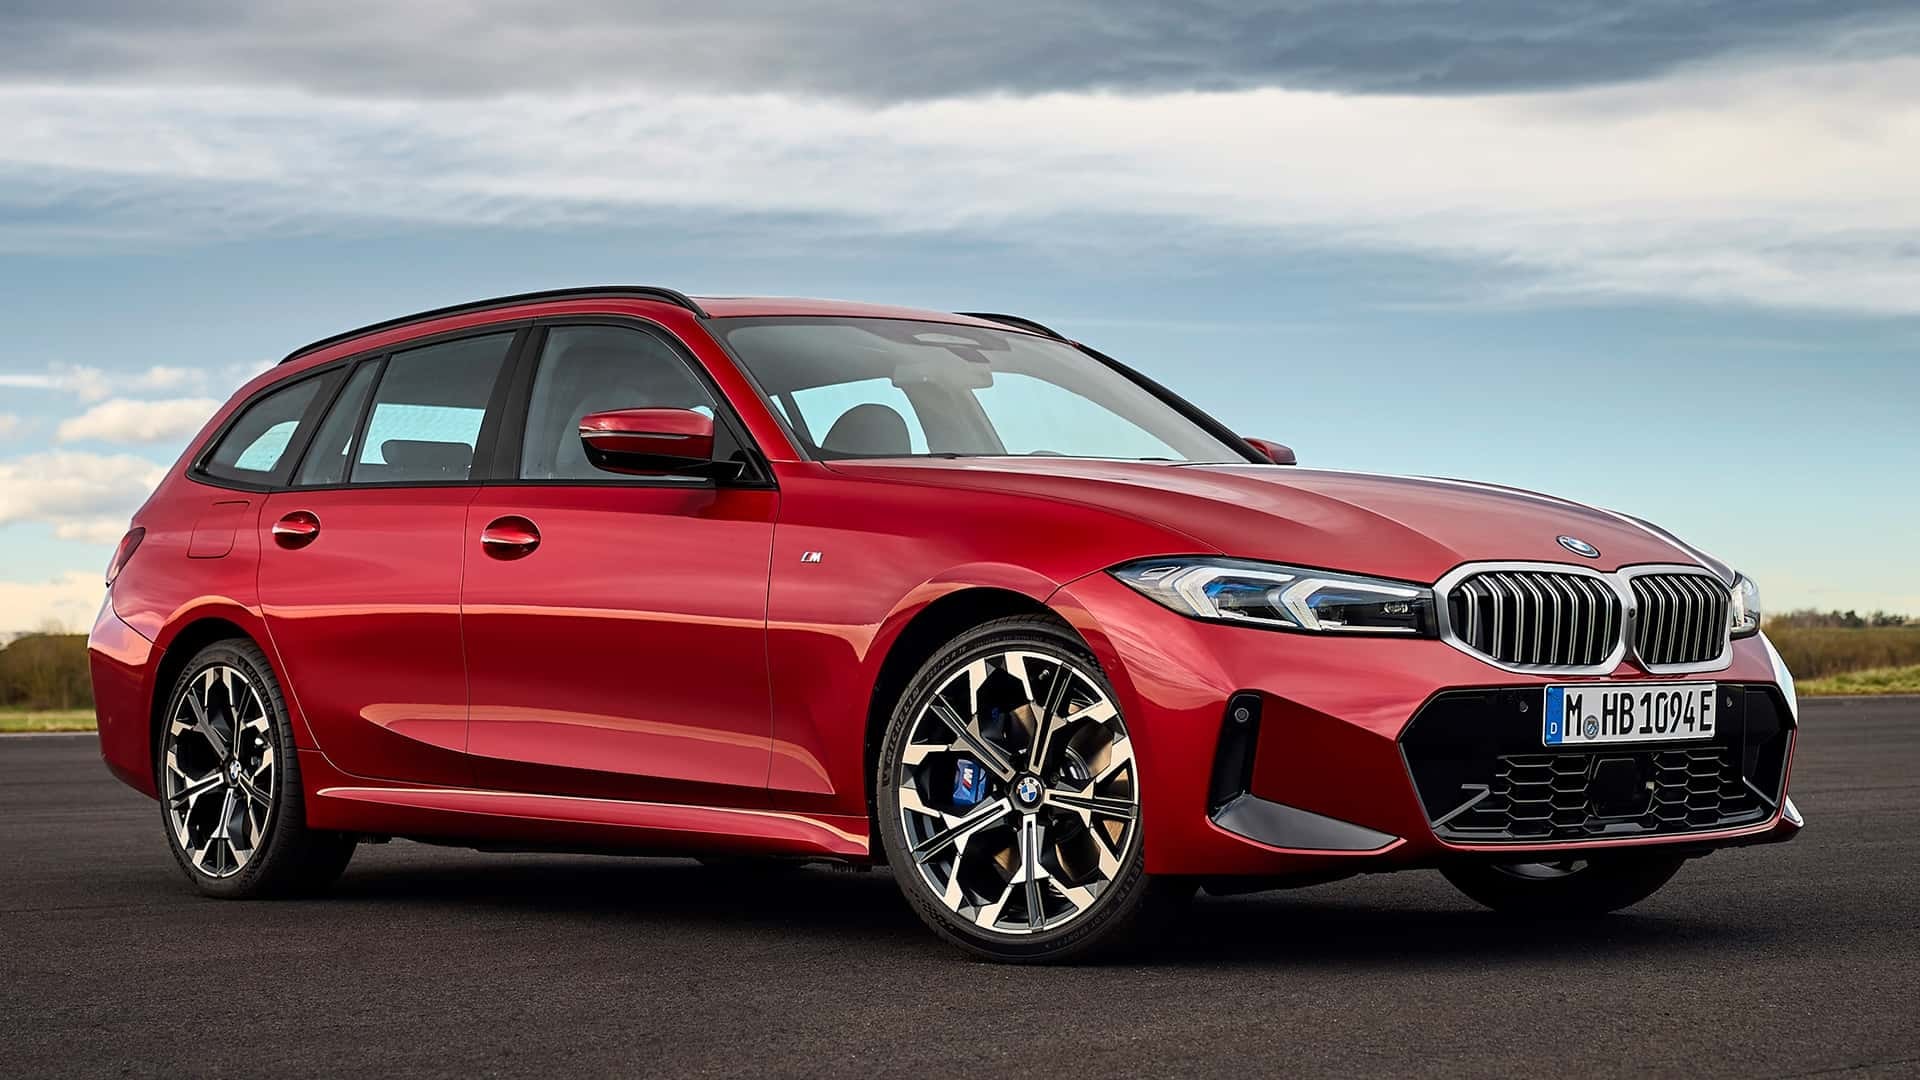 Vista dinámica de un BMW Serie 3 Touring en rojo.